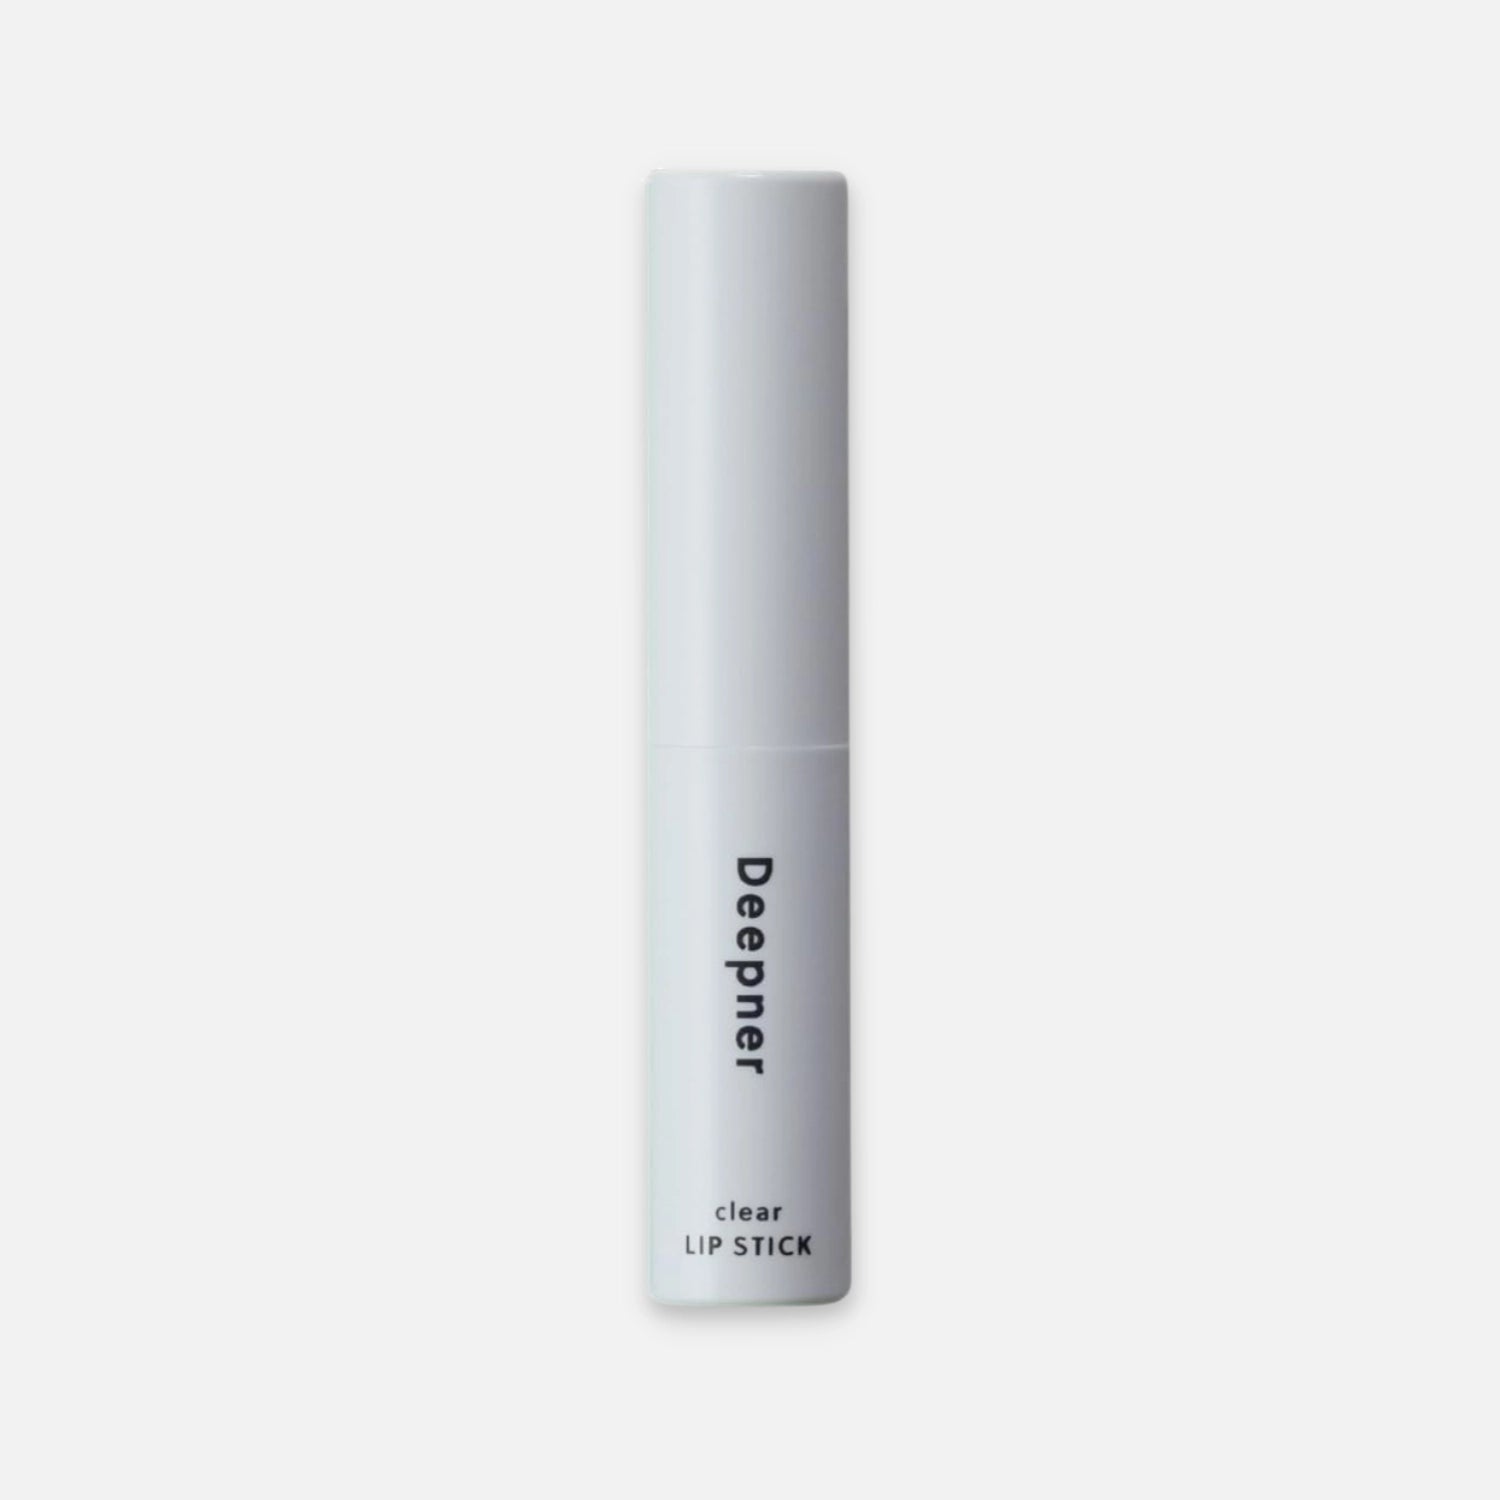 Menturm Deepner Medicated Clear Lip Stick SPF20/PA++ 2.3g - Buy Me Japan